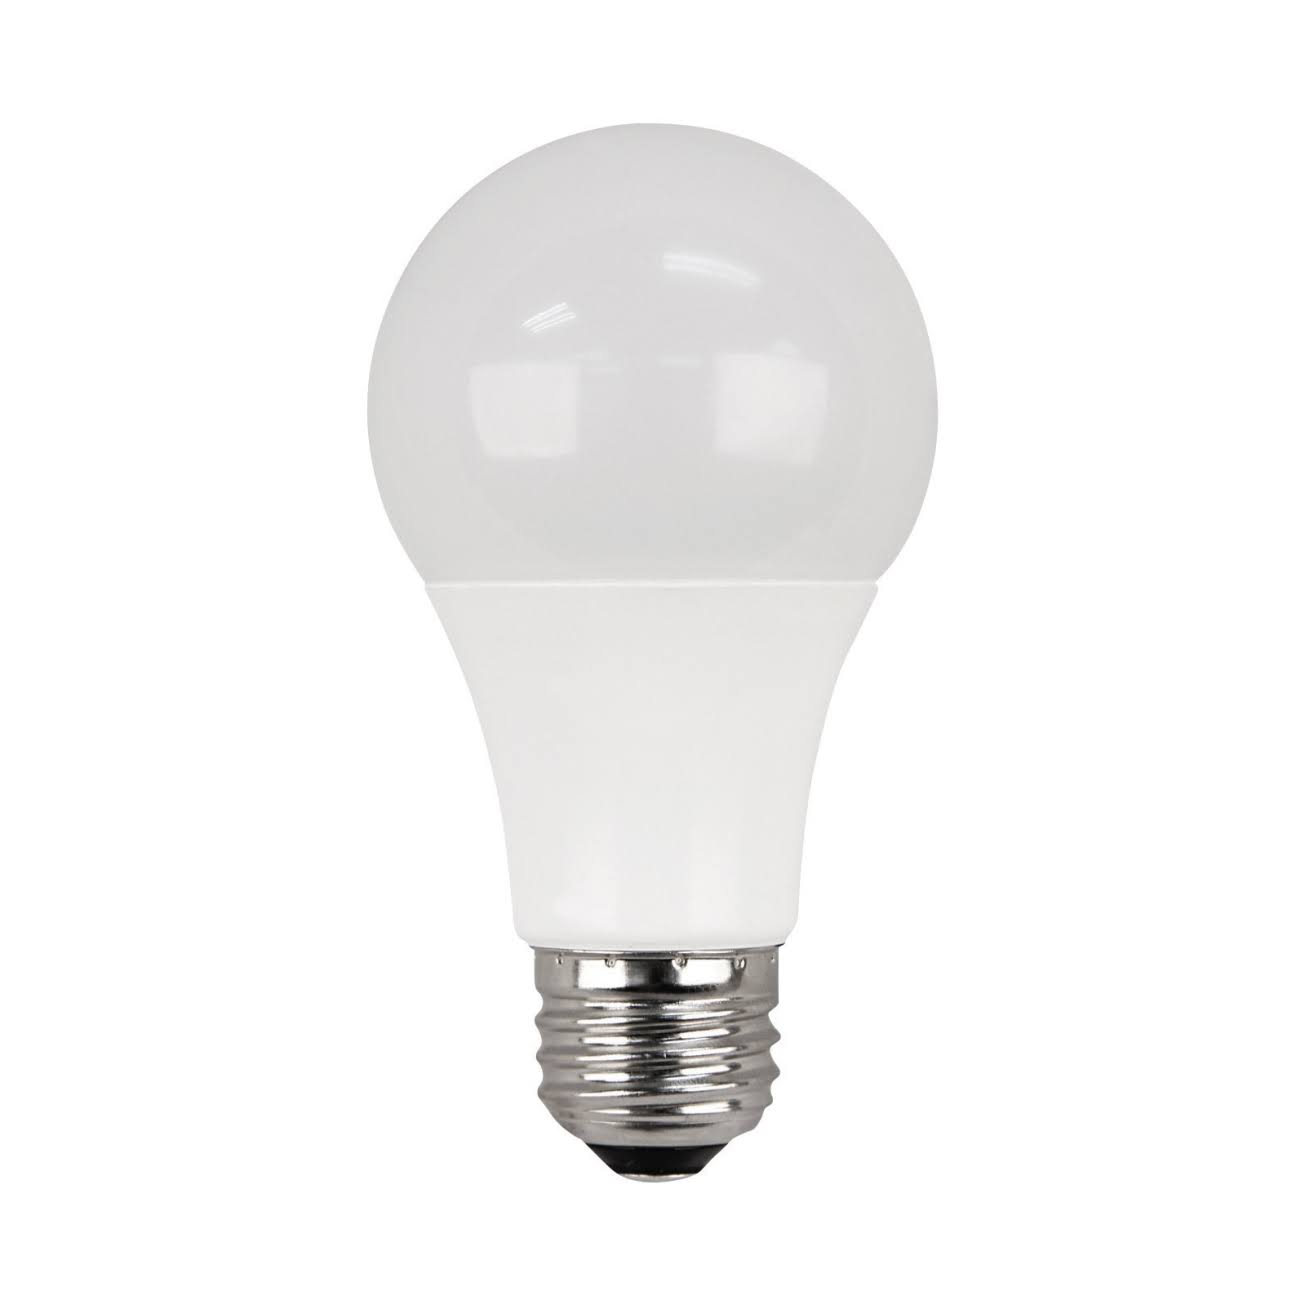 Ace LED Bulb - 6 Watts, Soft White